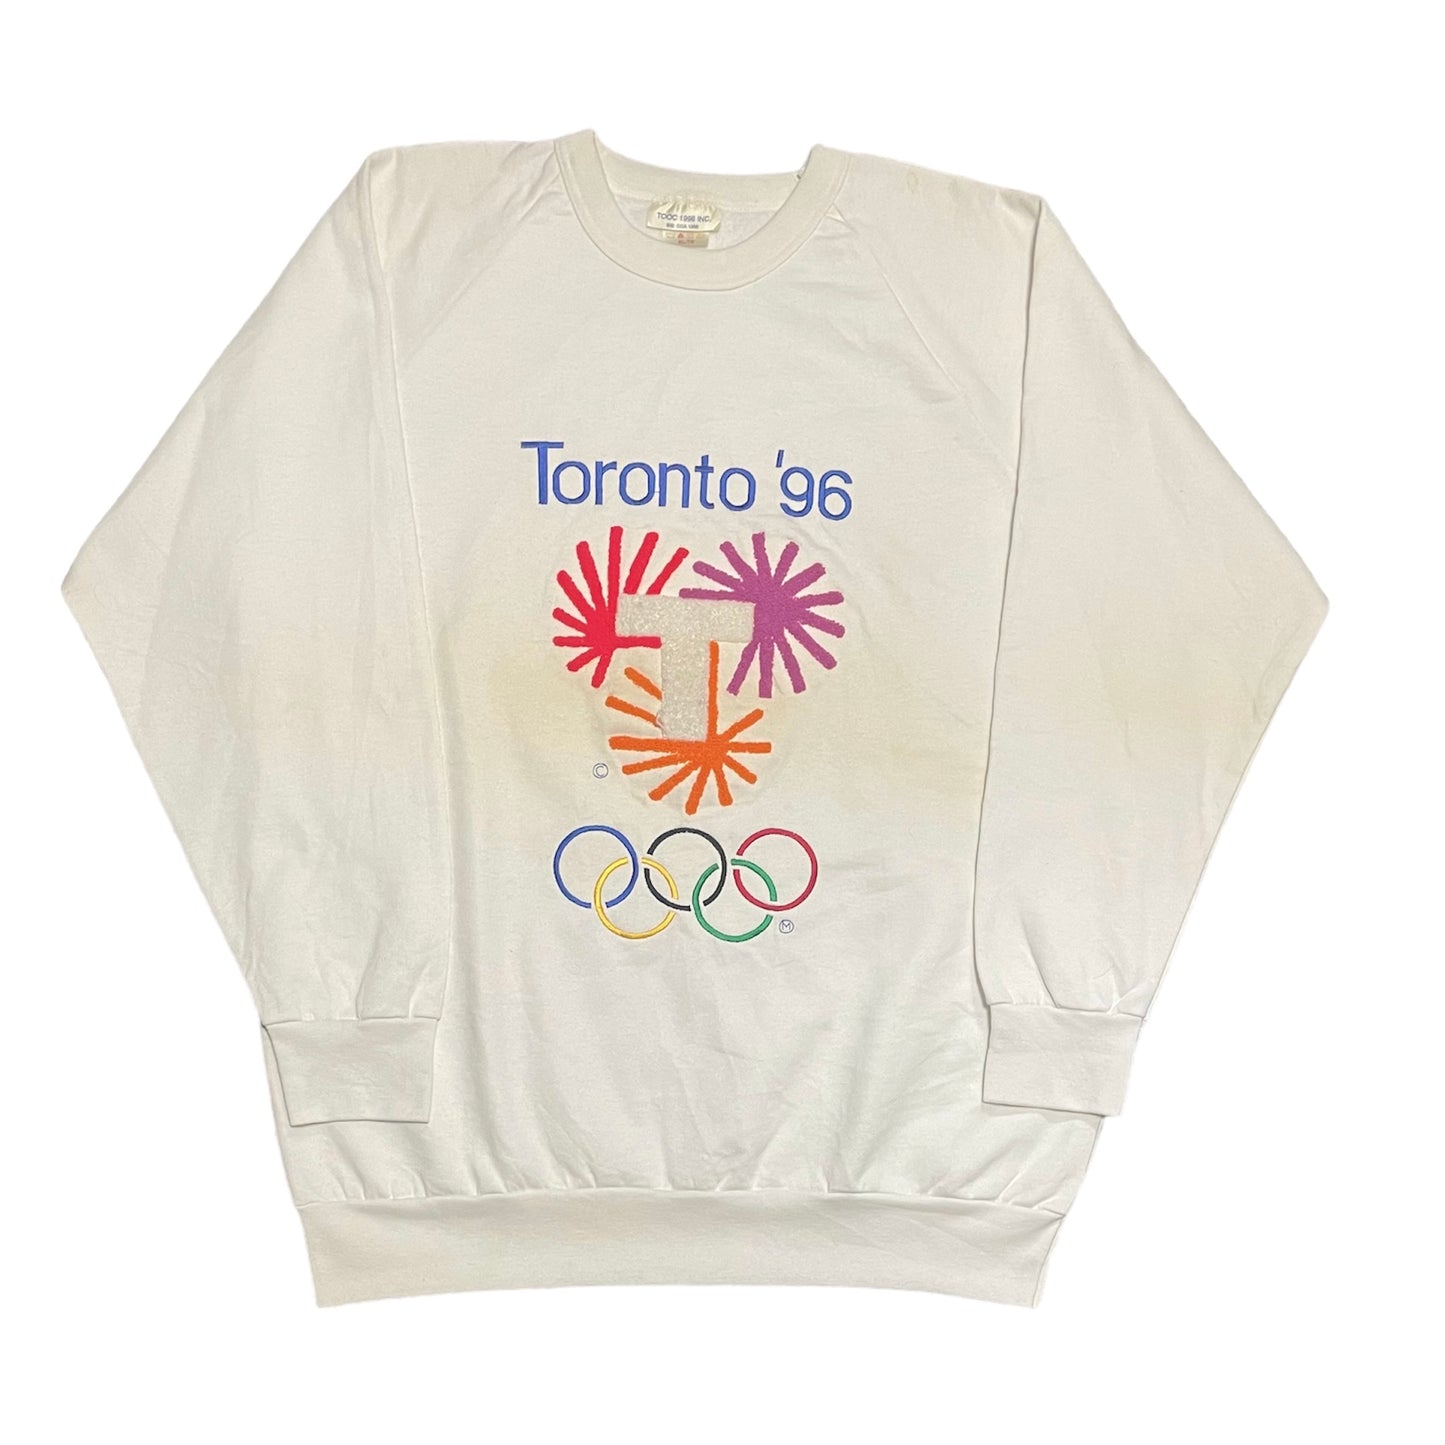 Vintage 1996 Toronto Winter Olympics Bid Crewneck